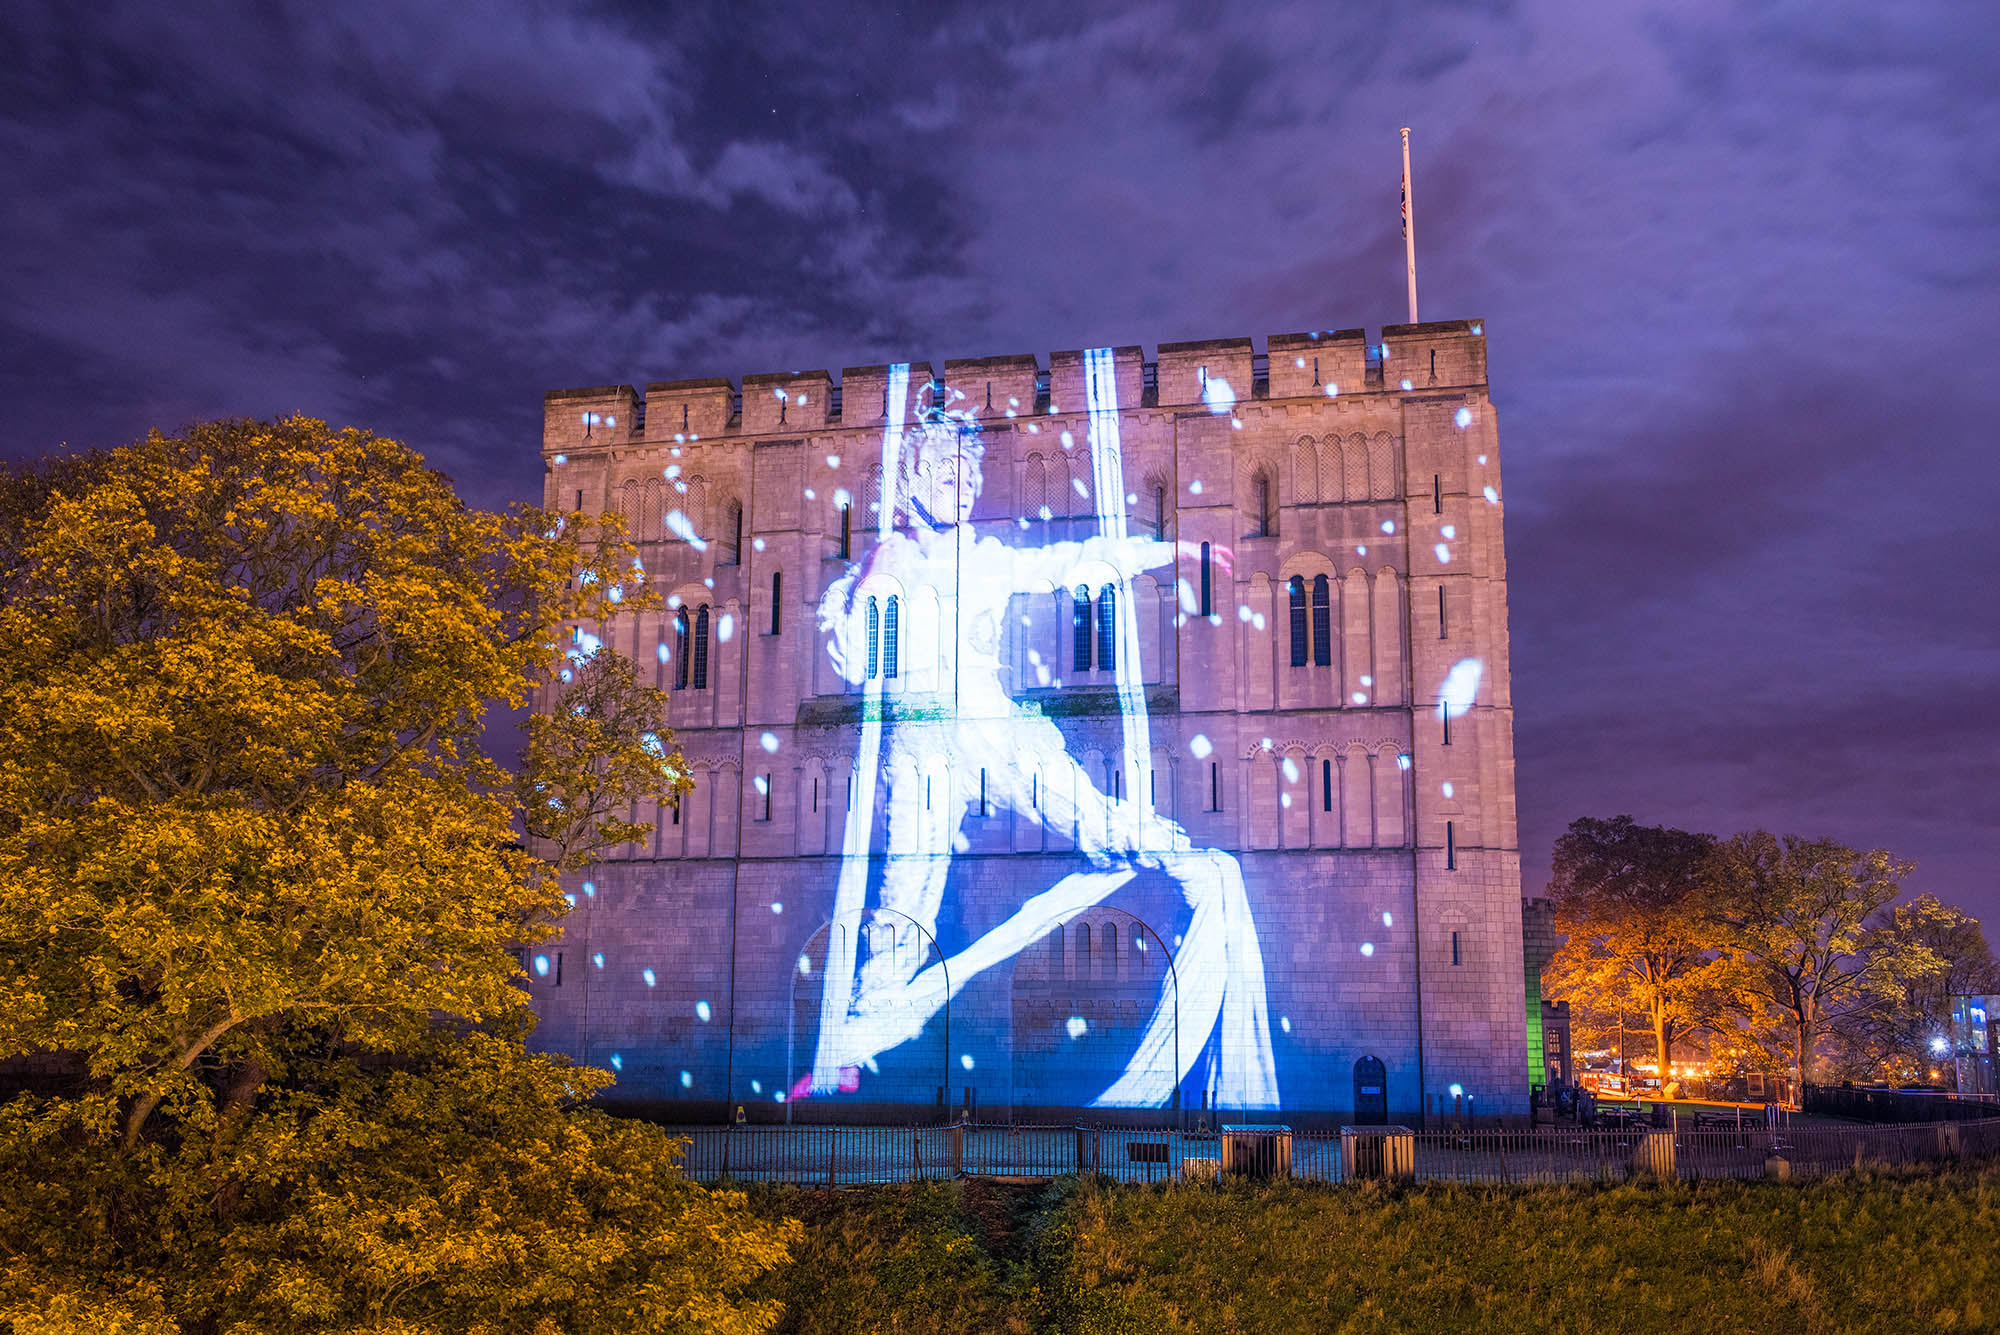 Norwich Castle Christmas Projection show